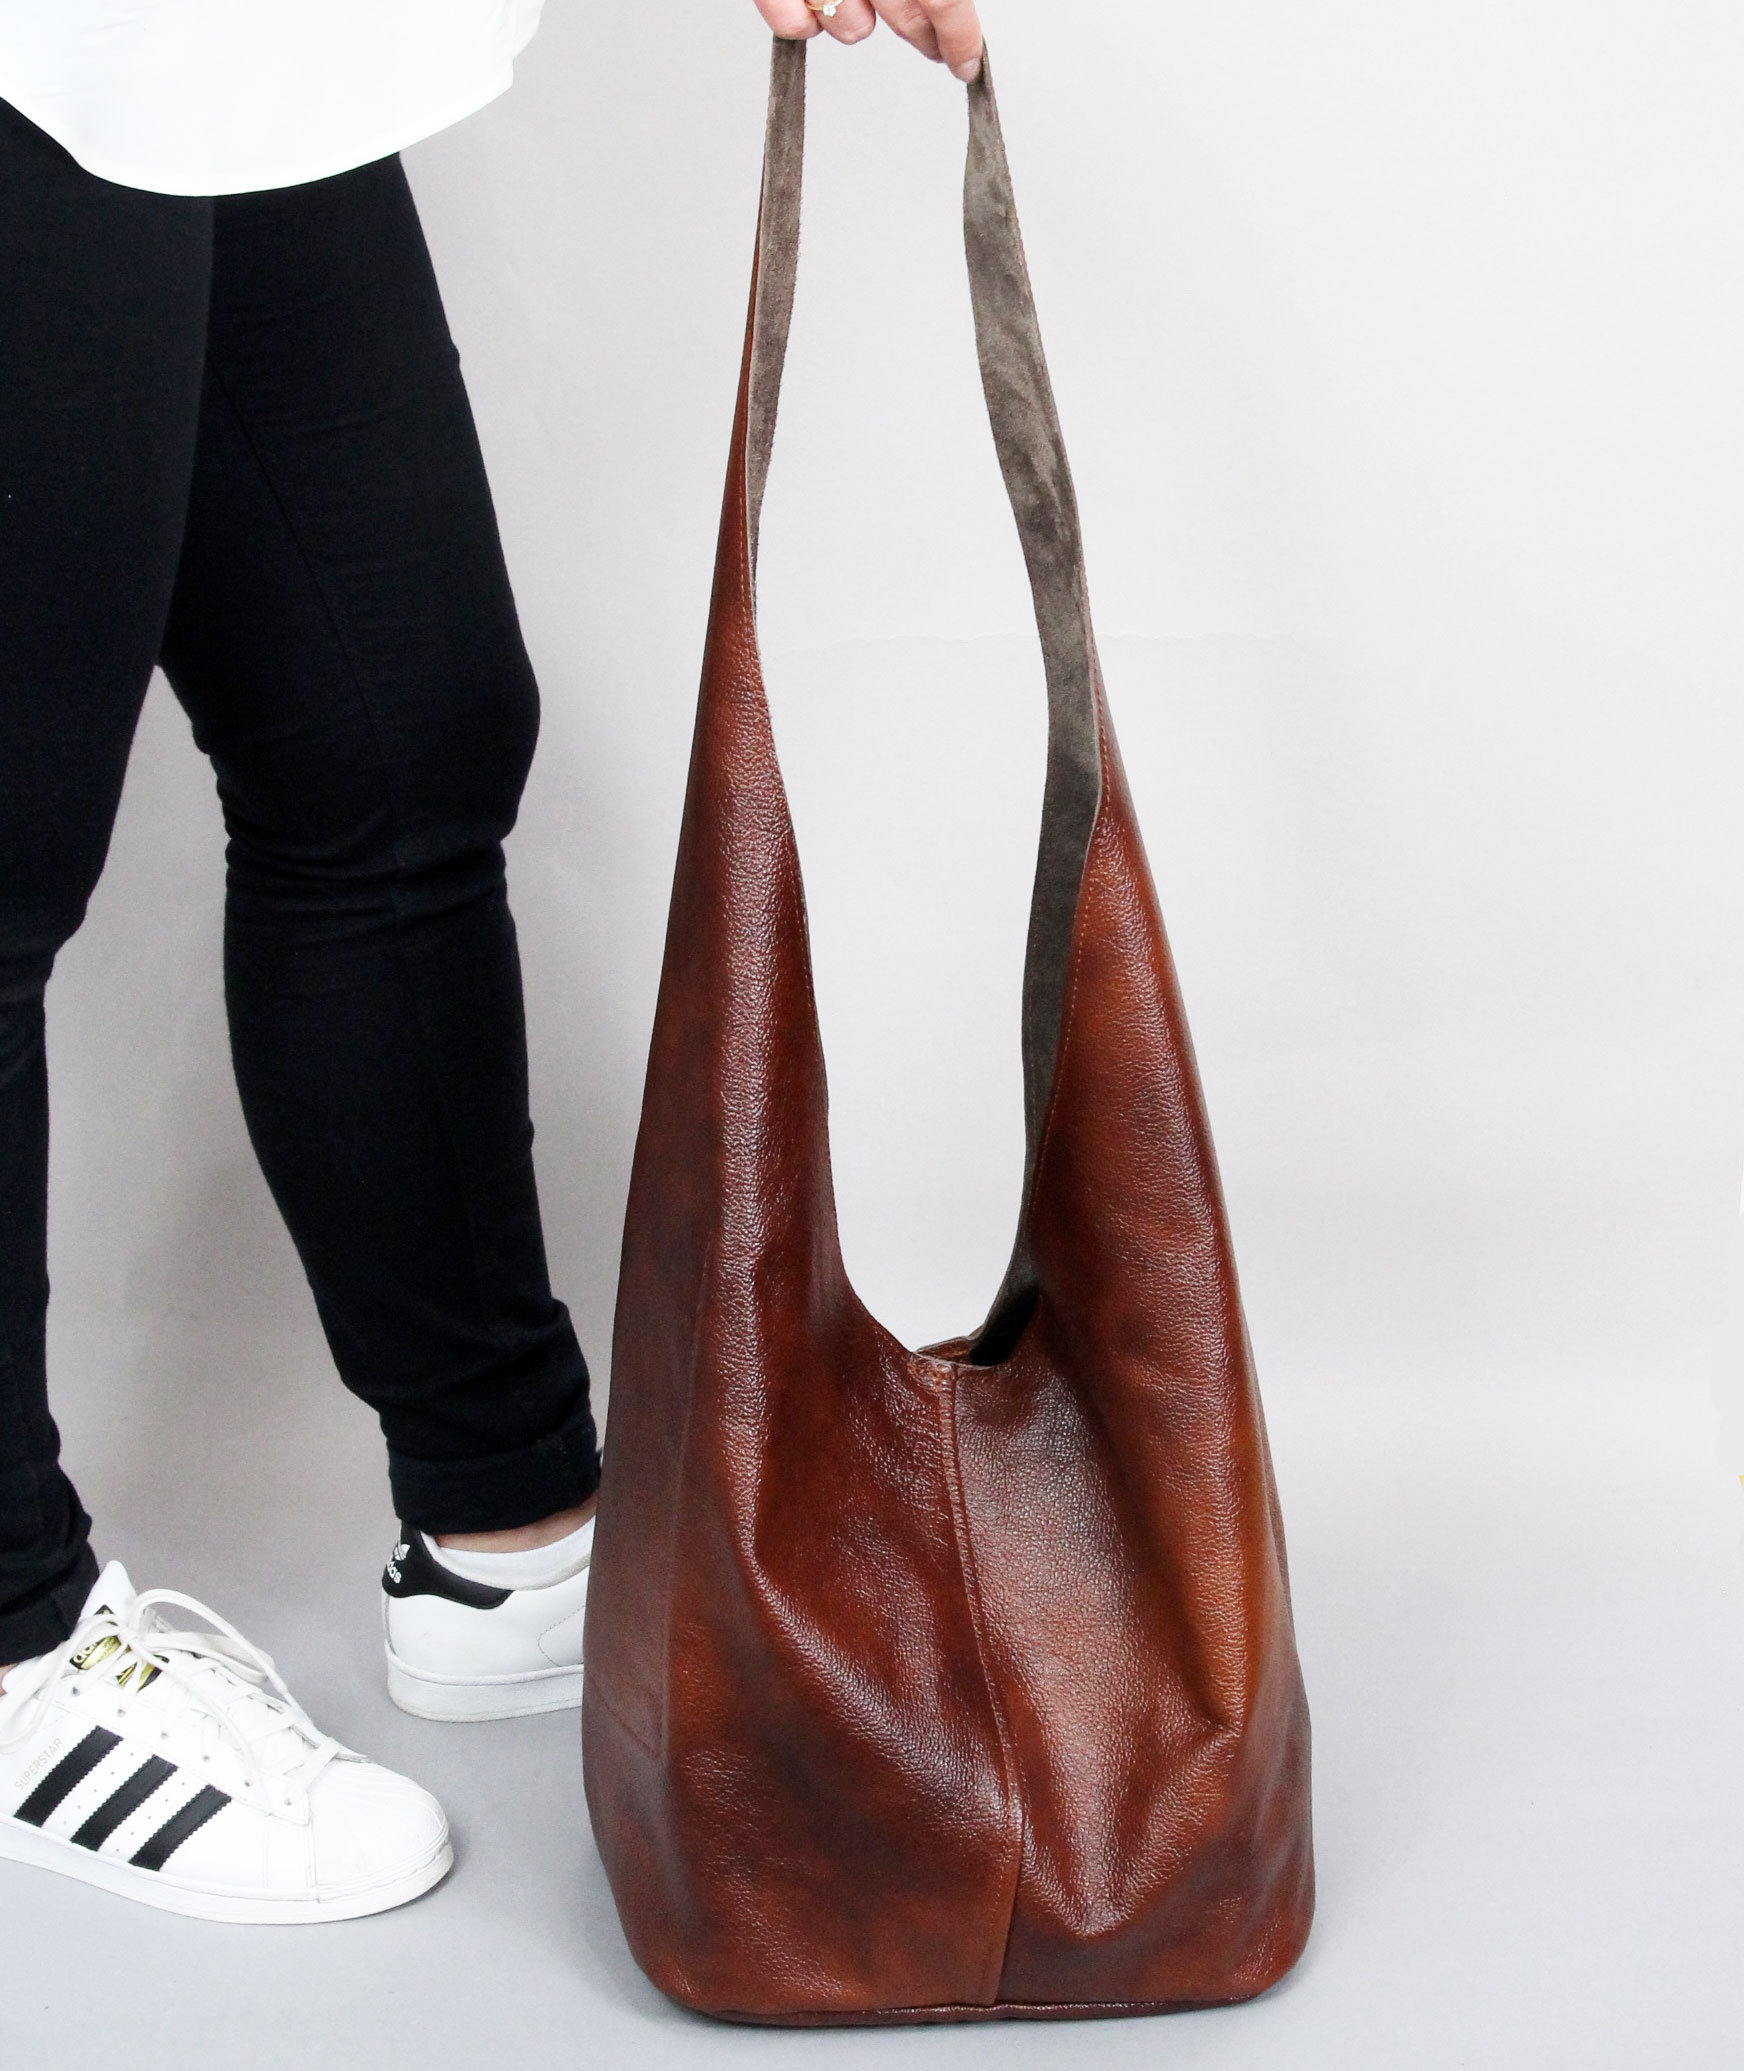 Hawwwy Hobo Bag Women Faux Leather Purses Handbags Shoulder Crossbody Fashion Vegan, Brown